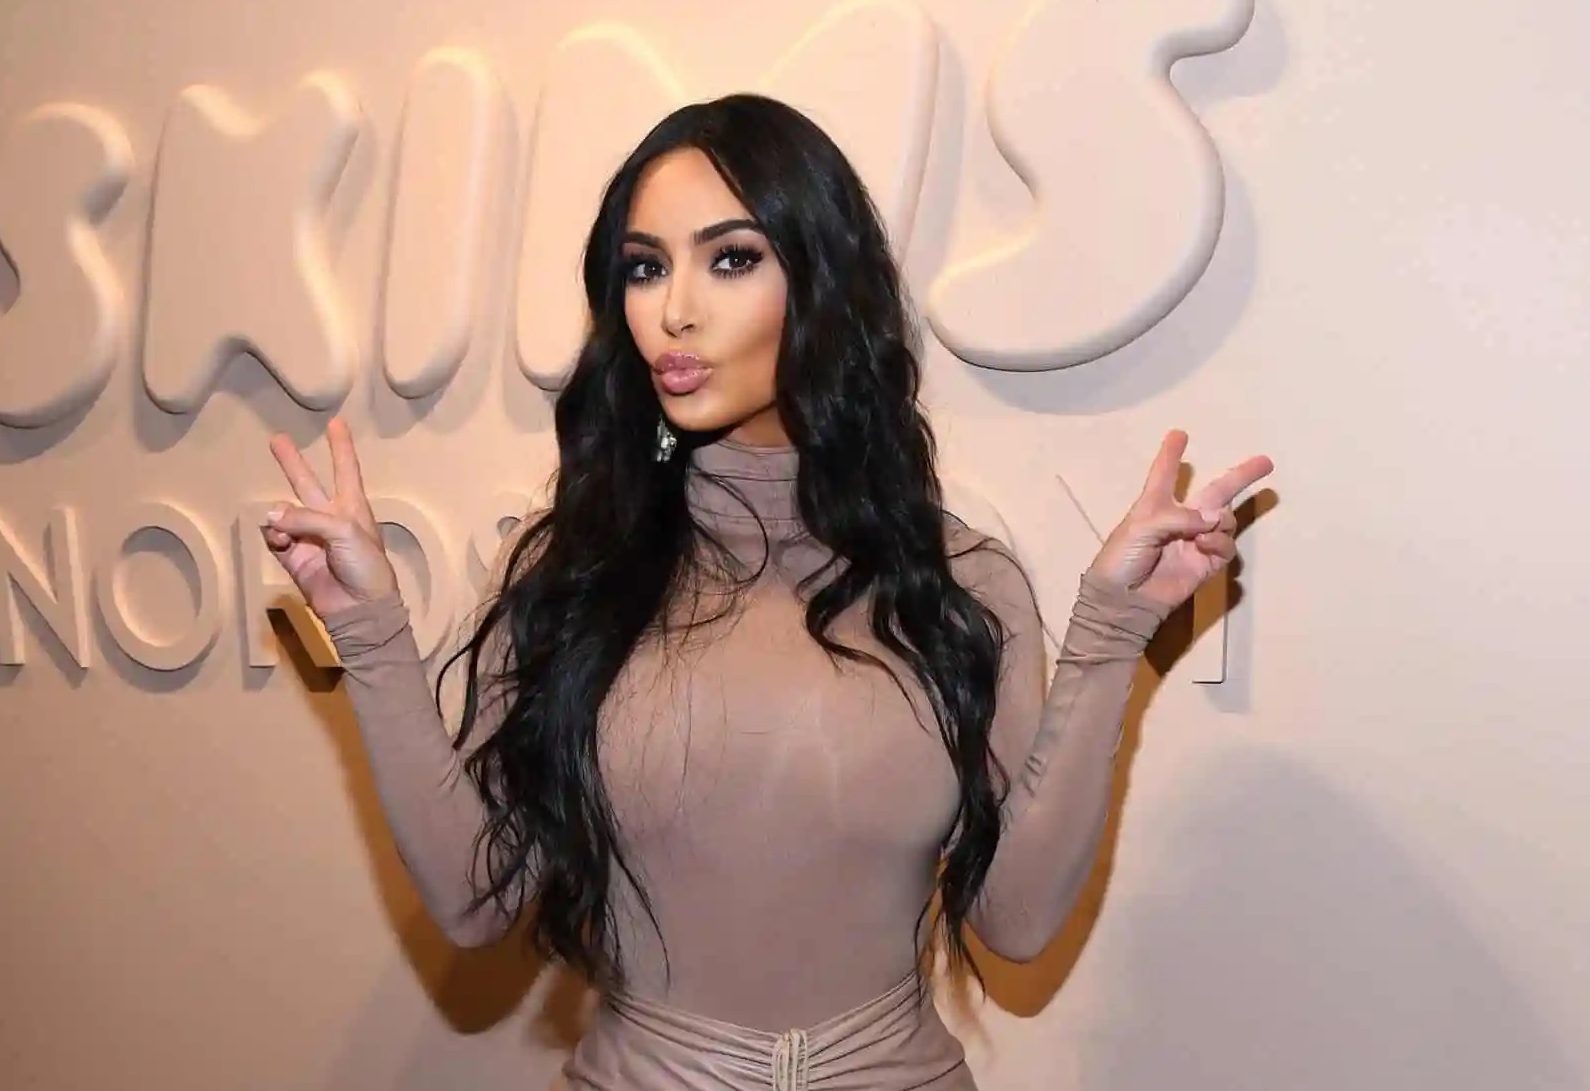 Kim Kardashian Rep Responds To Injured Woman’s Claim That SKIMS Body Tape “Ripped Her Skin Off”